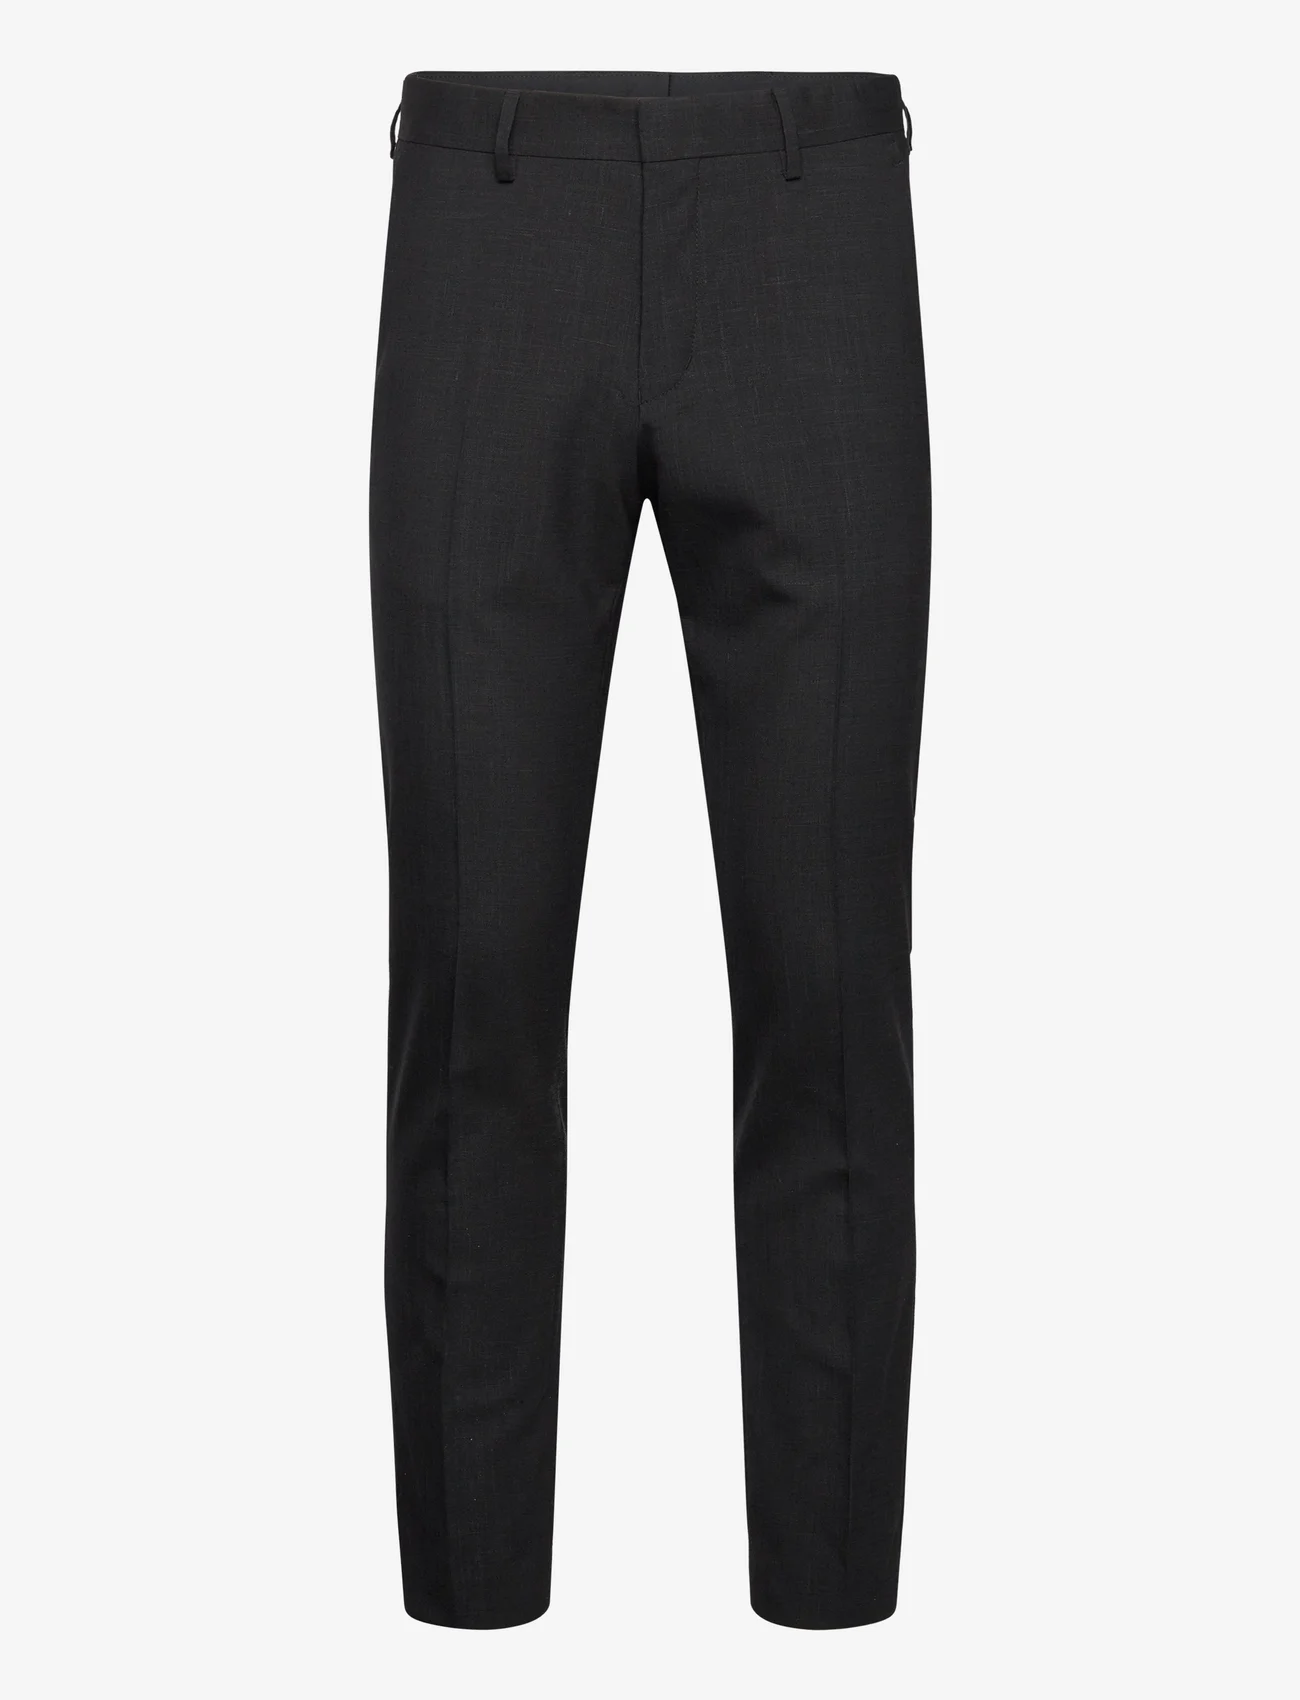 Tiger of Sweden - TENUTAS - suit trousers - black - 0